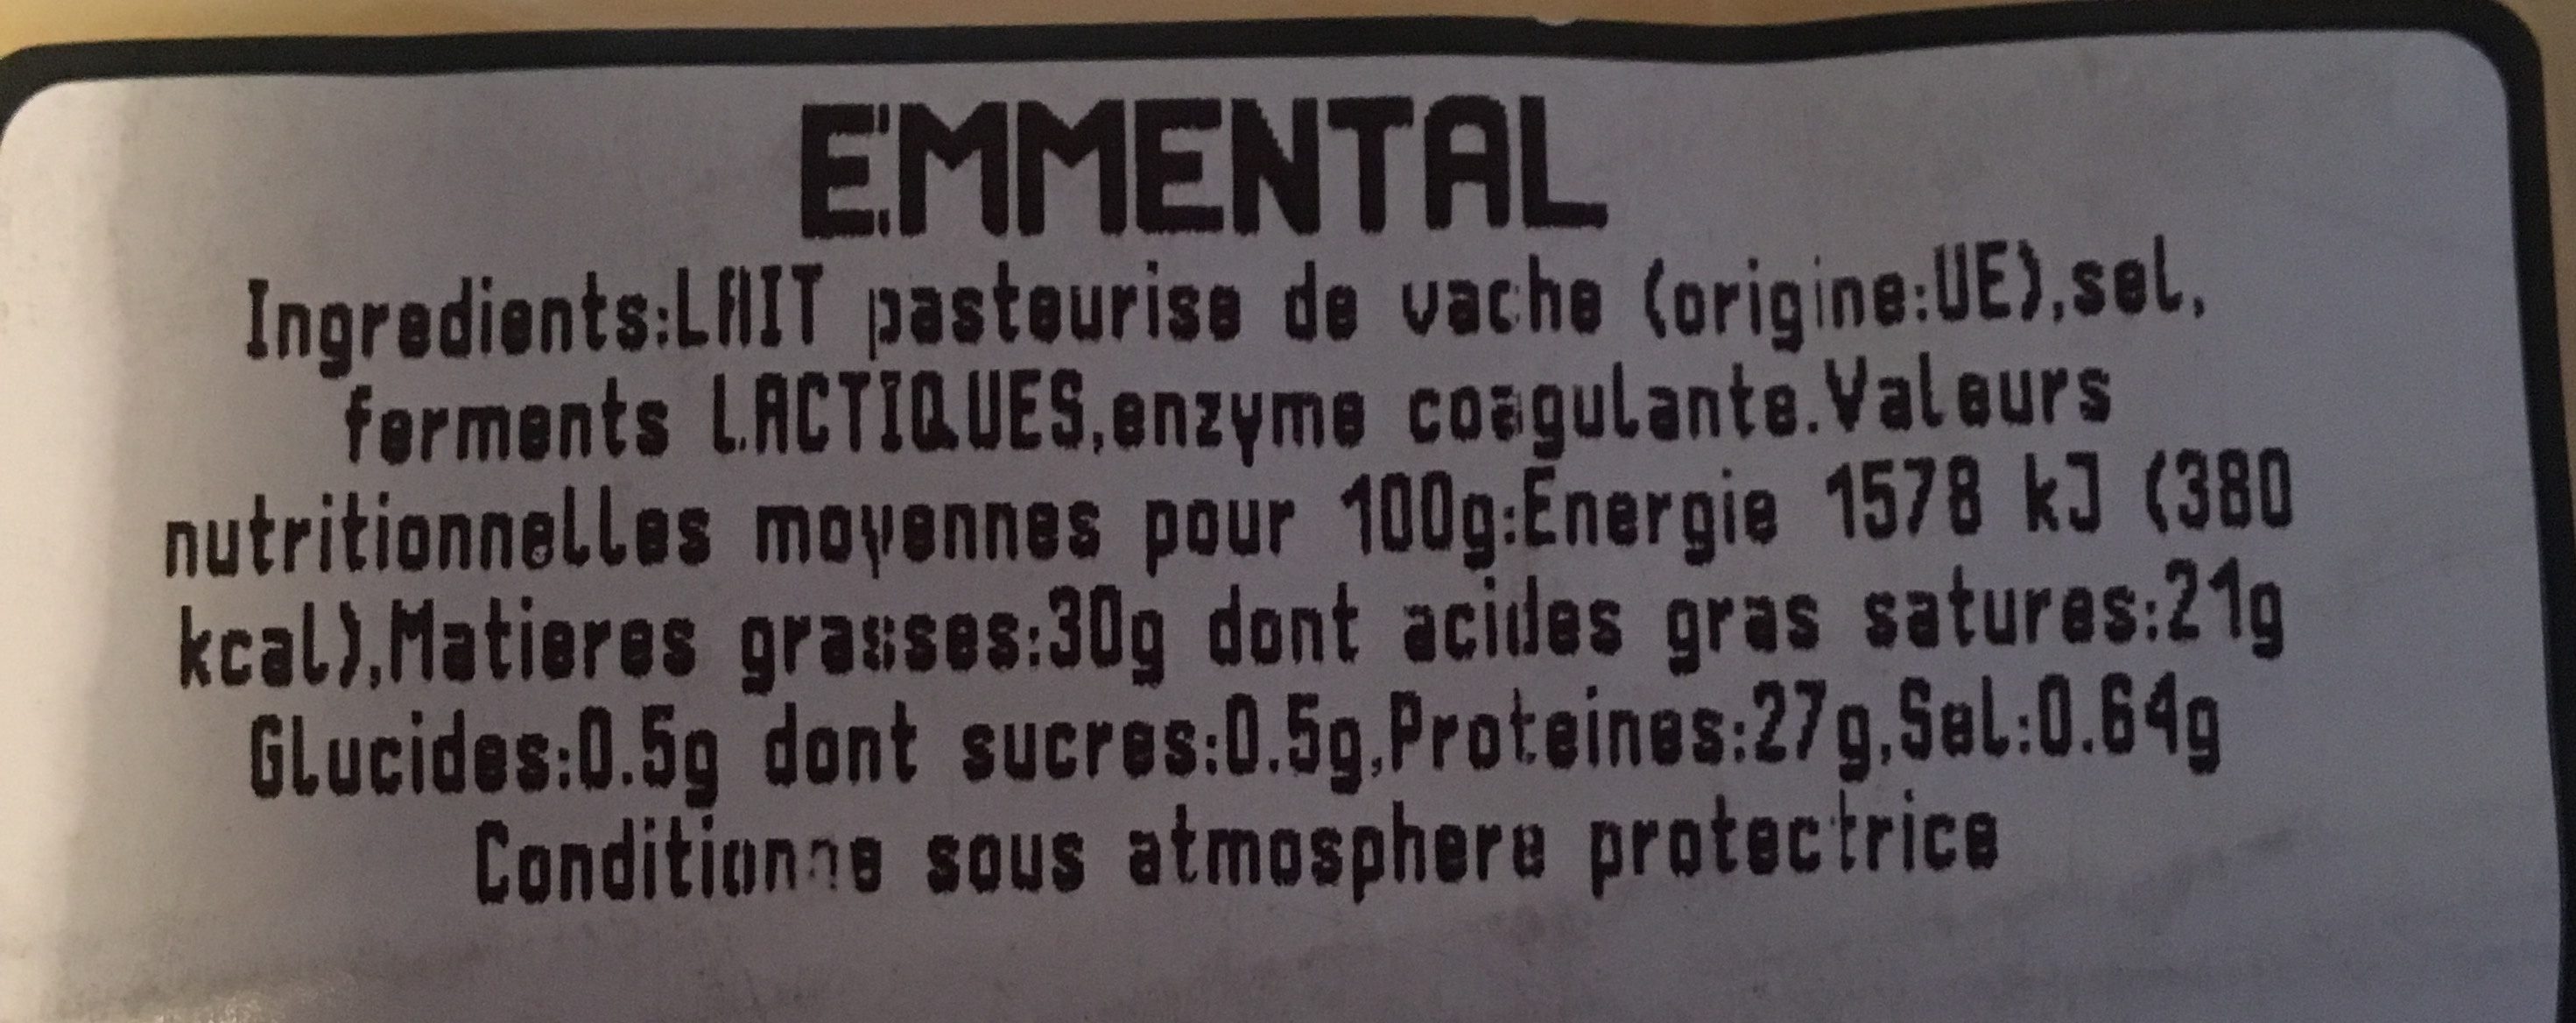 Emmental - Ingrediënten - fr